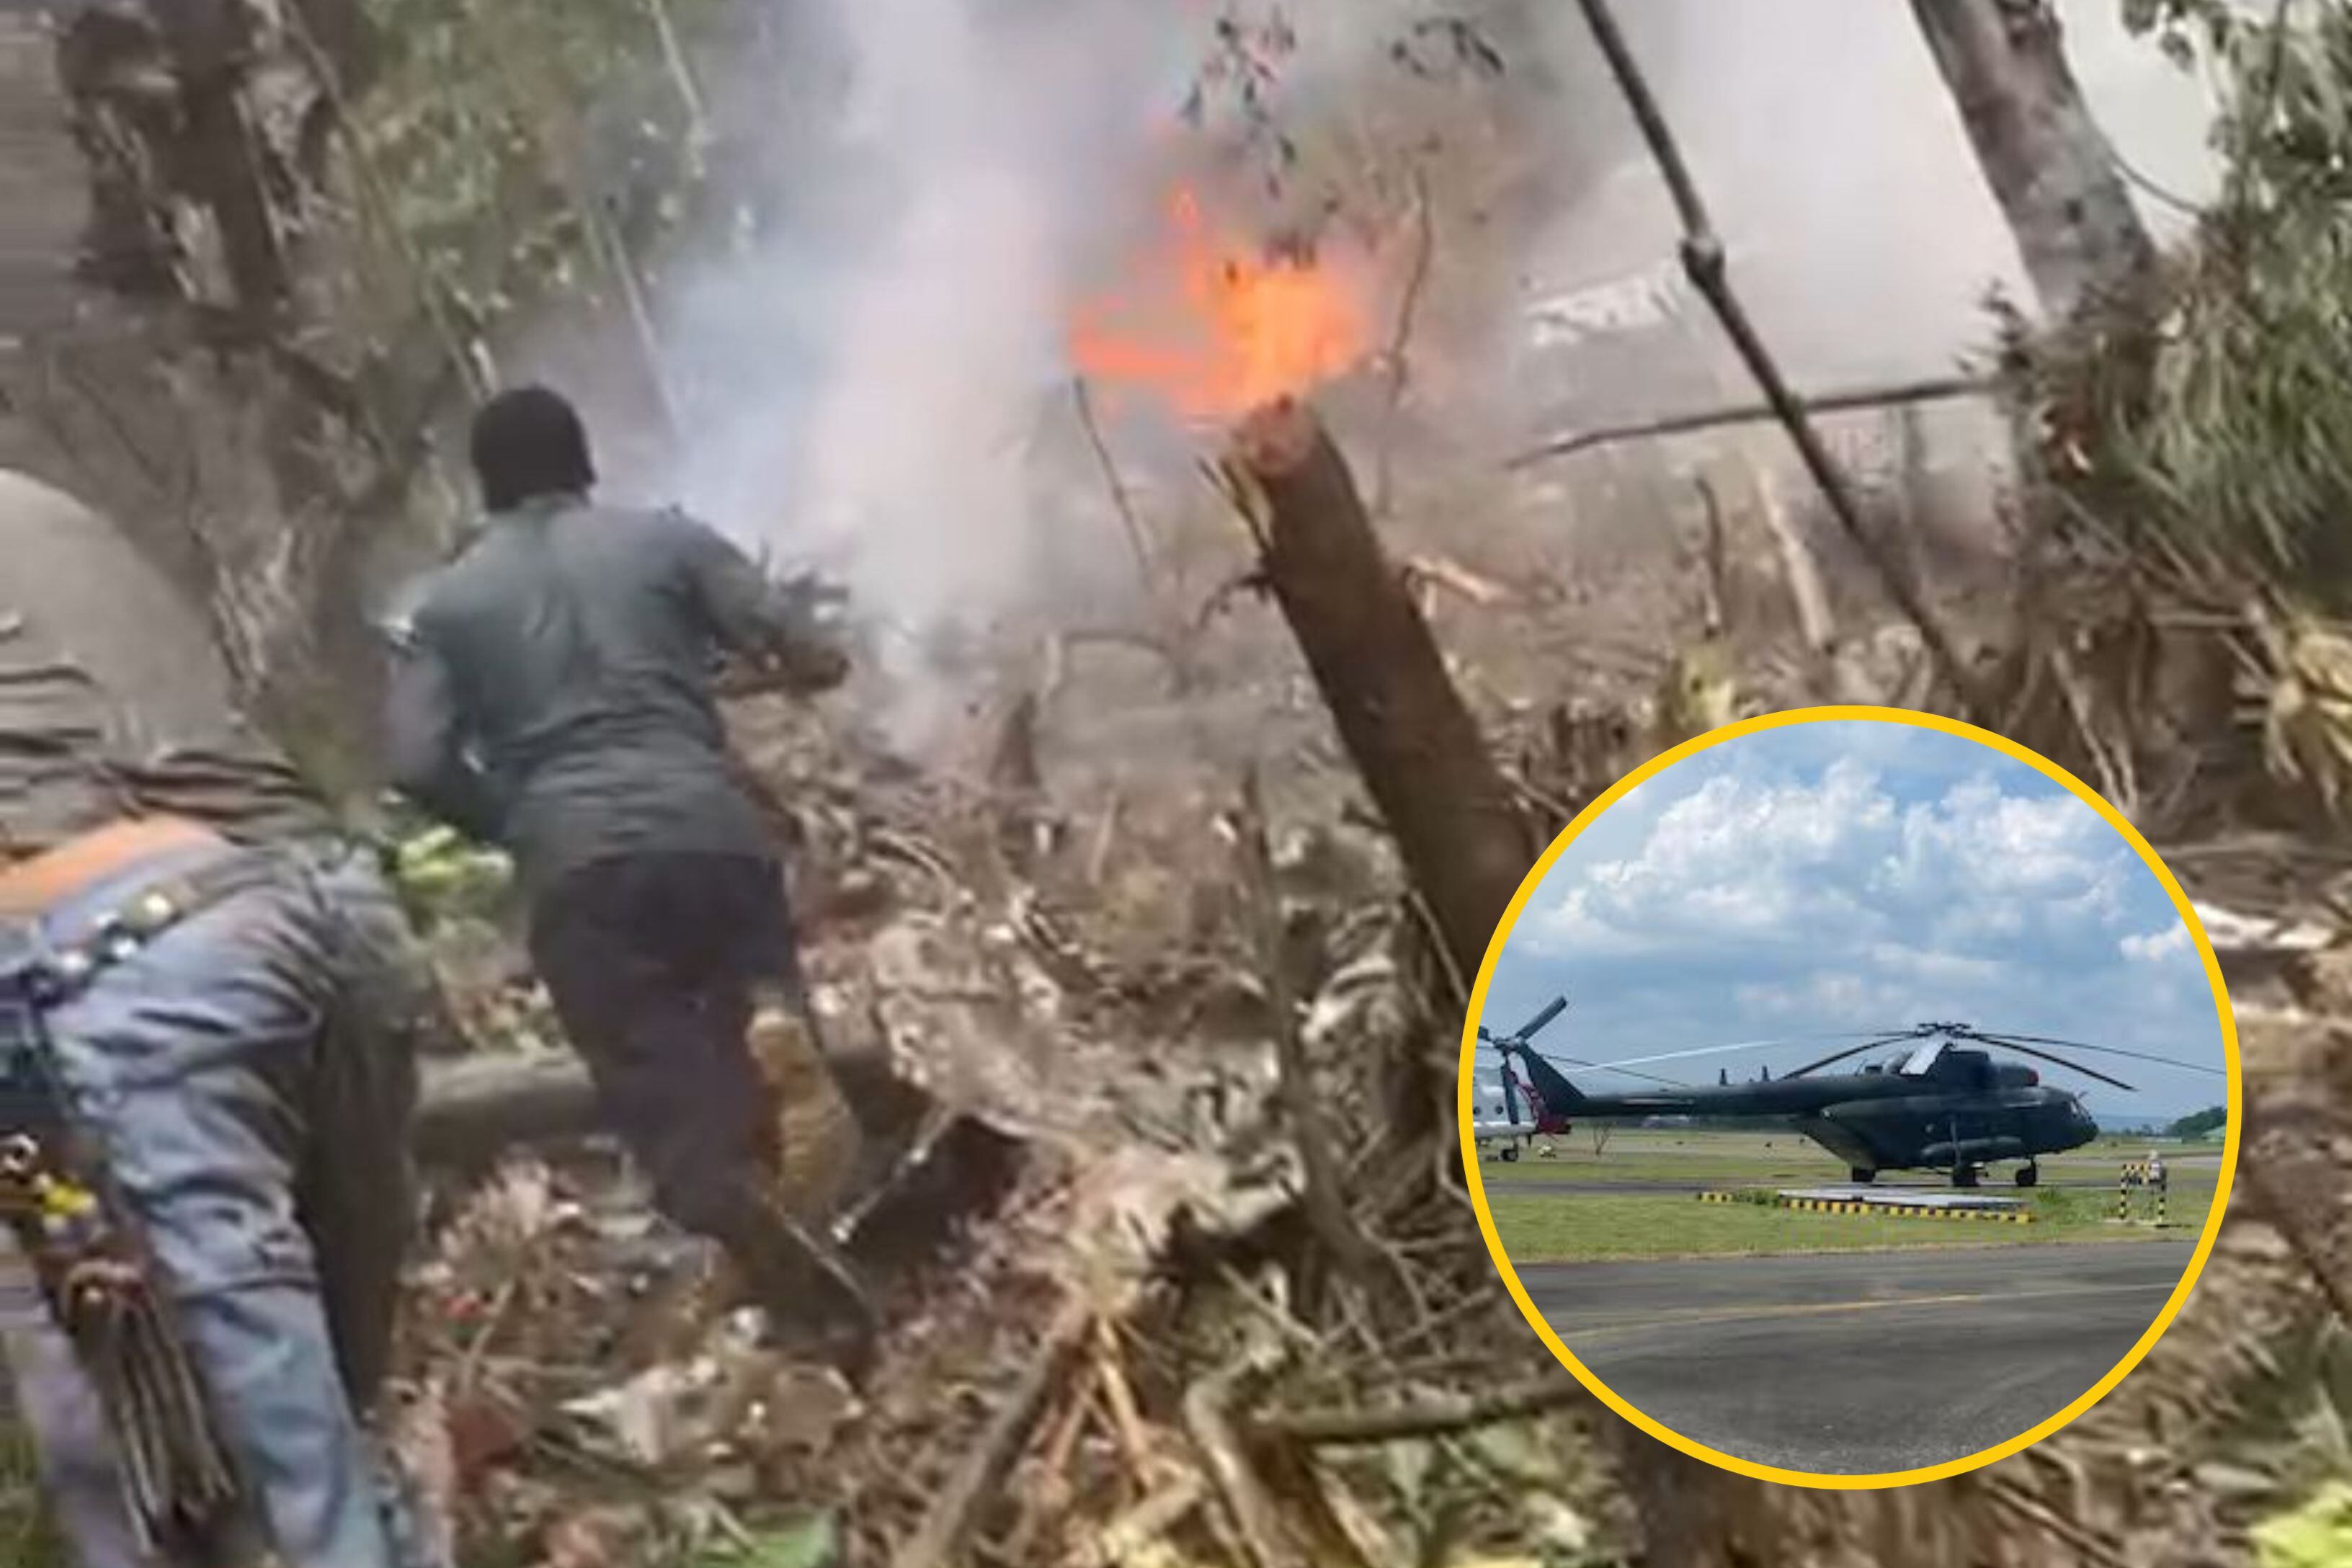 helicóptero accidentado en bolívar era ruso: ¿había tenido mantenimiento?